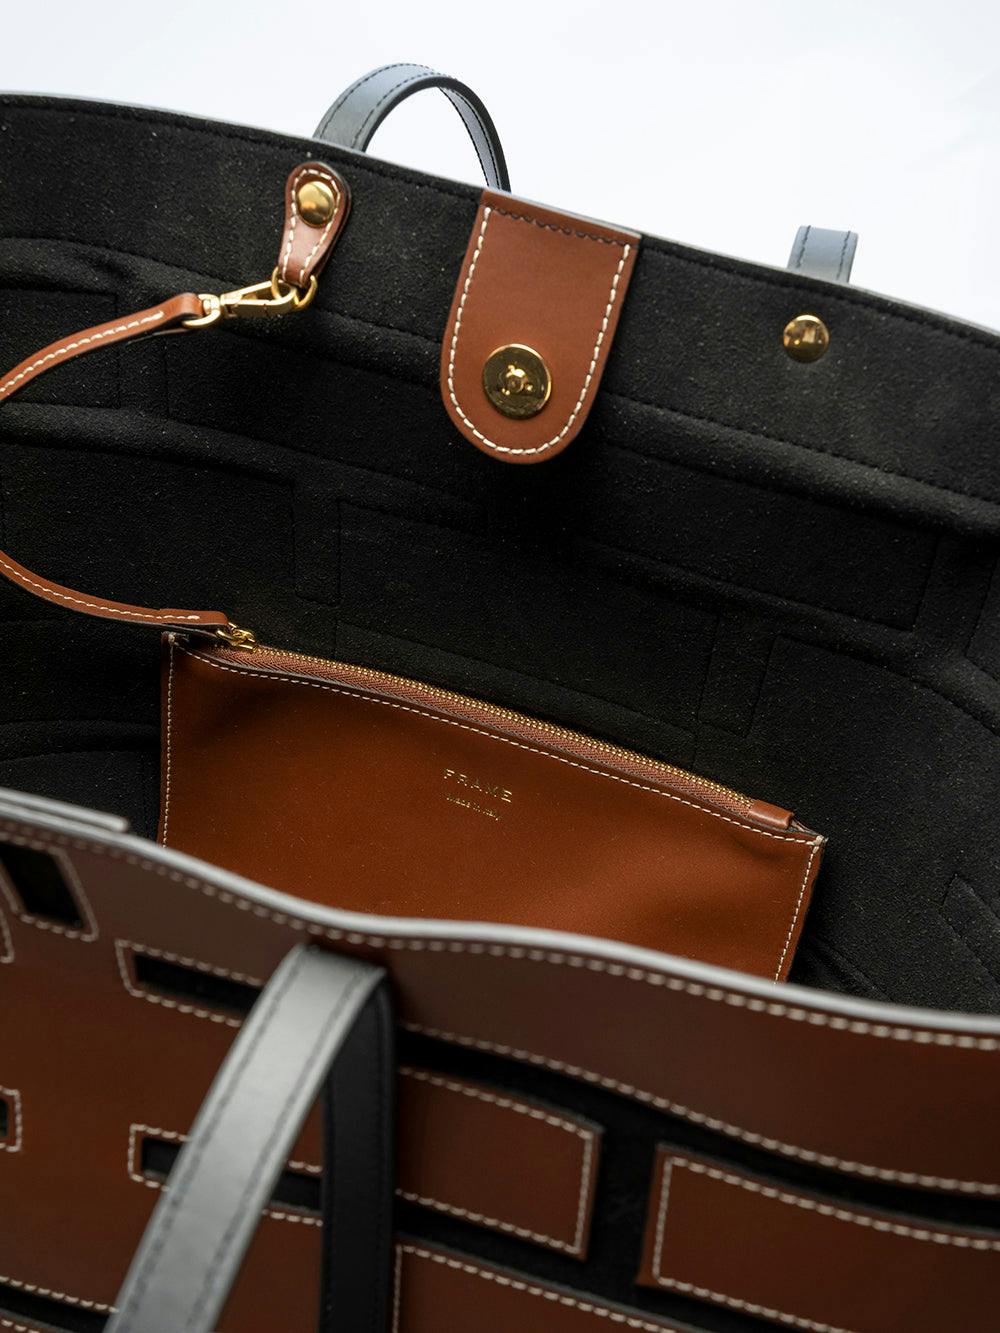 handbag detail view